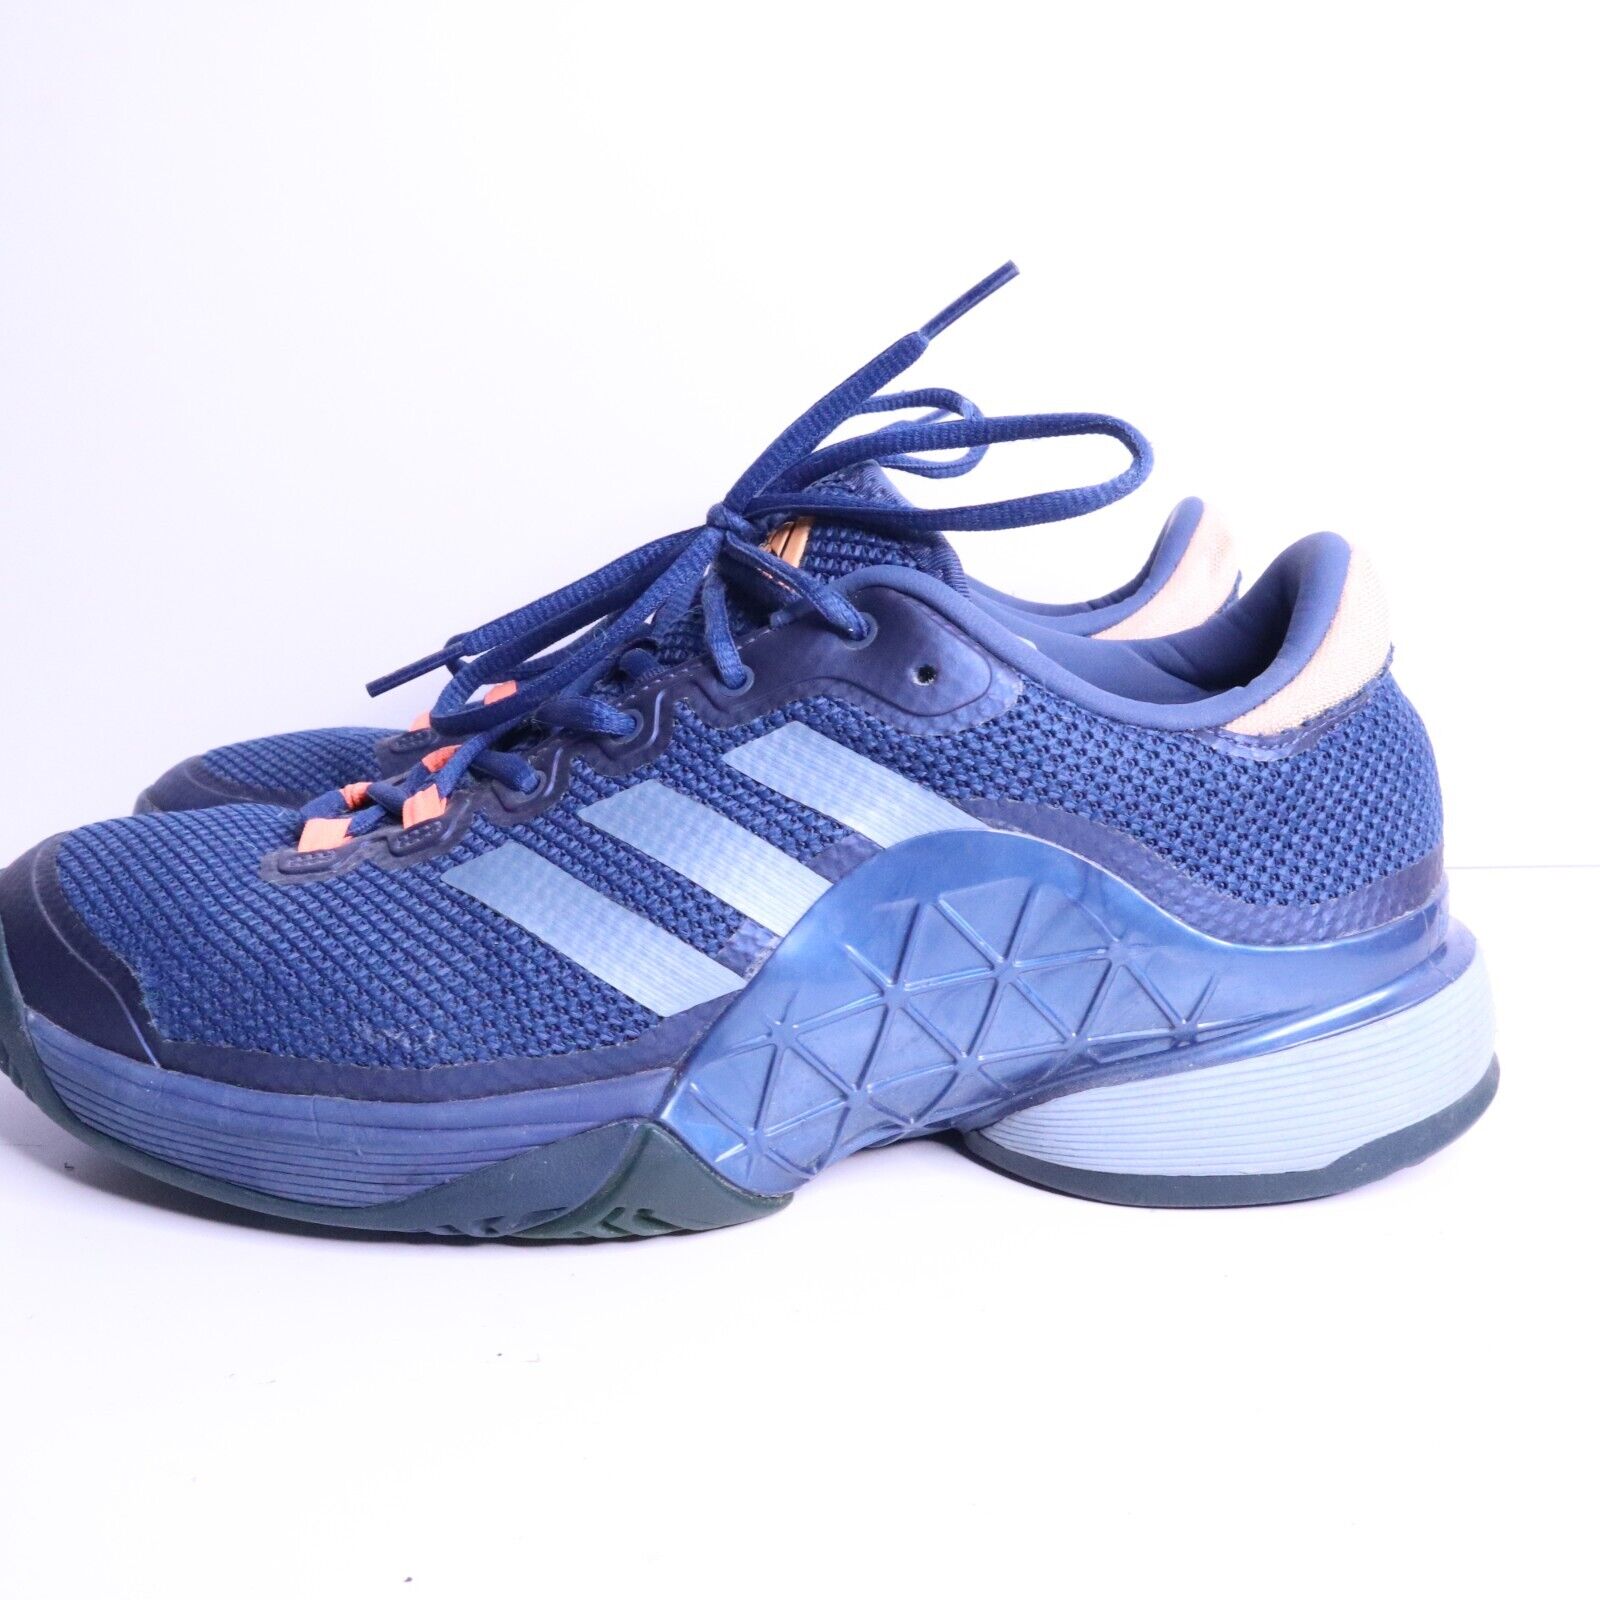 Adidas Men’s Barricade 2017 Tennis Shoe (Mystic Blue/Glow Orange) BA9073  Size 10